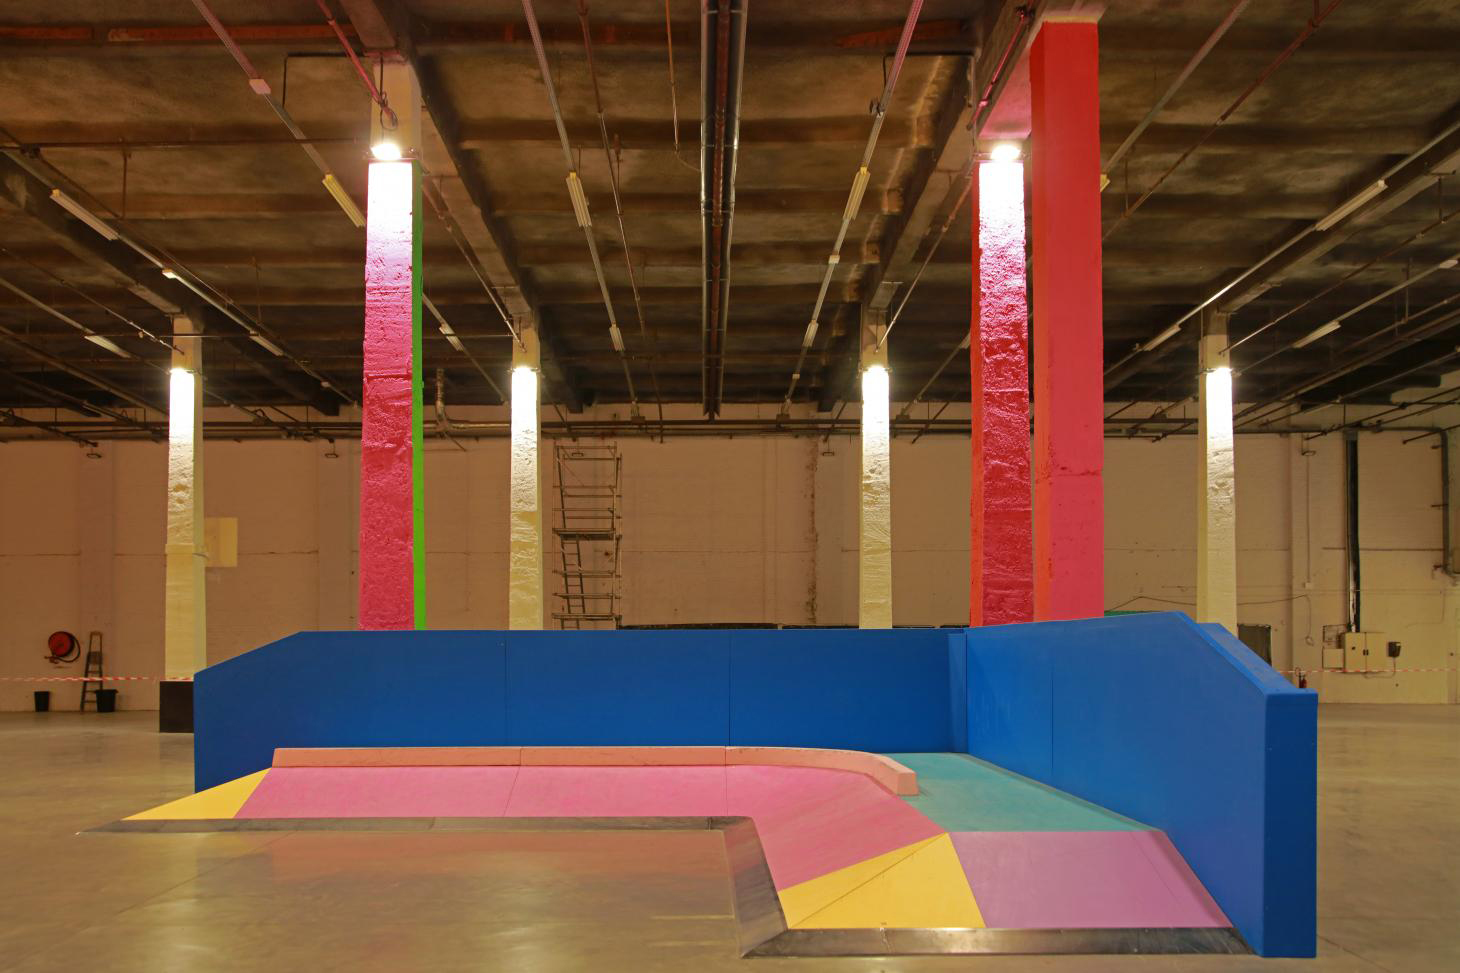 Golden columns and fluorescent paint helped Yinka Ilori turn Roubaix’s Halle B warehouse into the Colorama Skatepark.